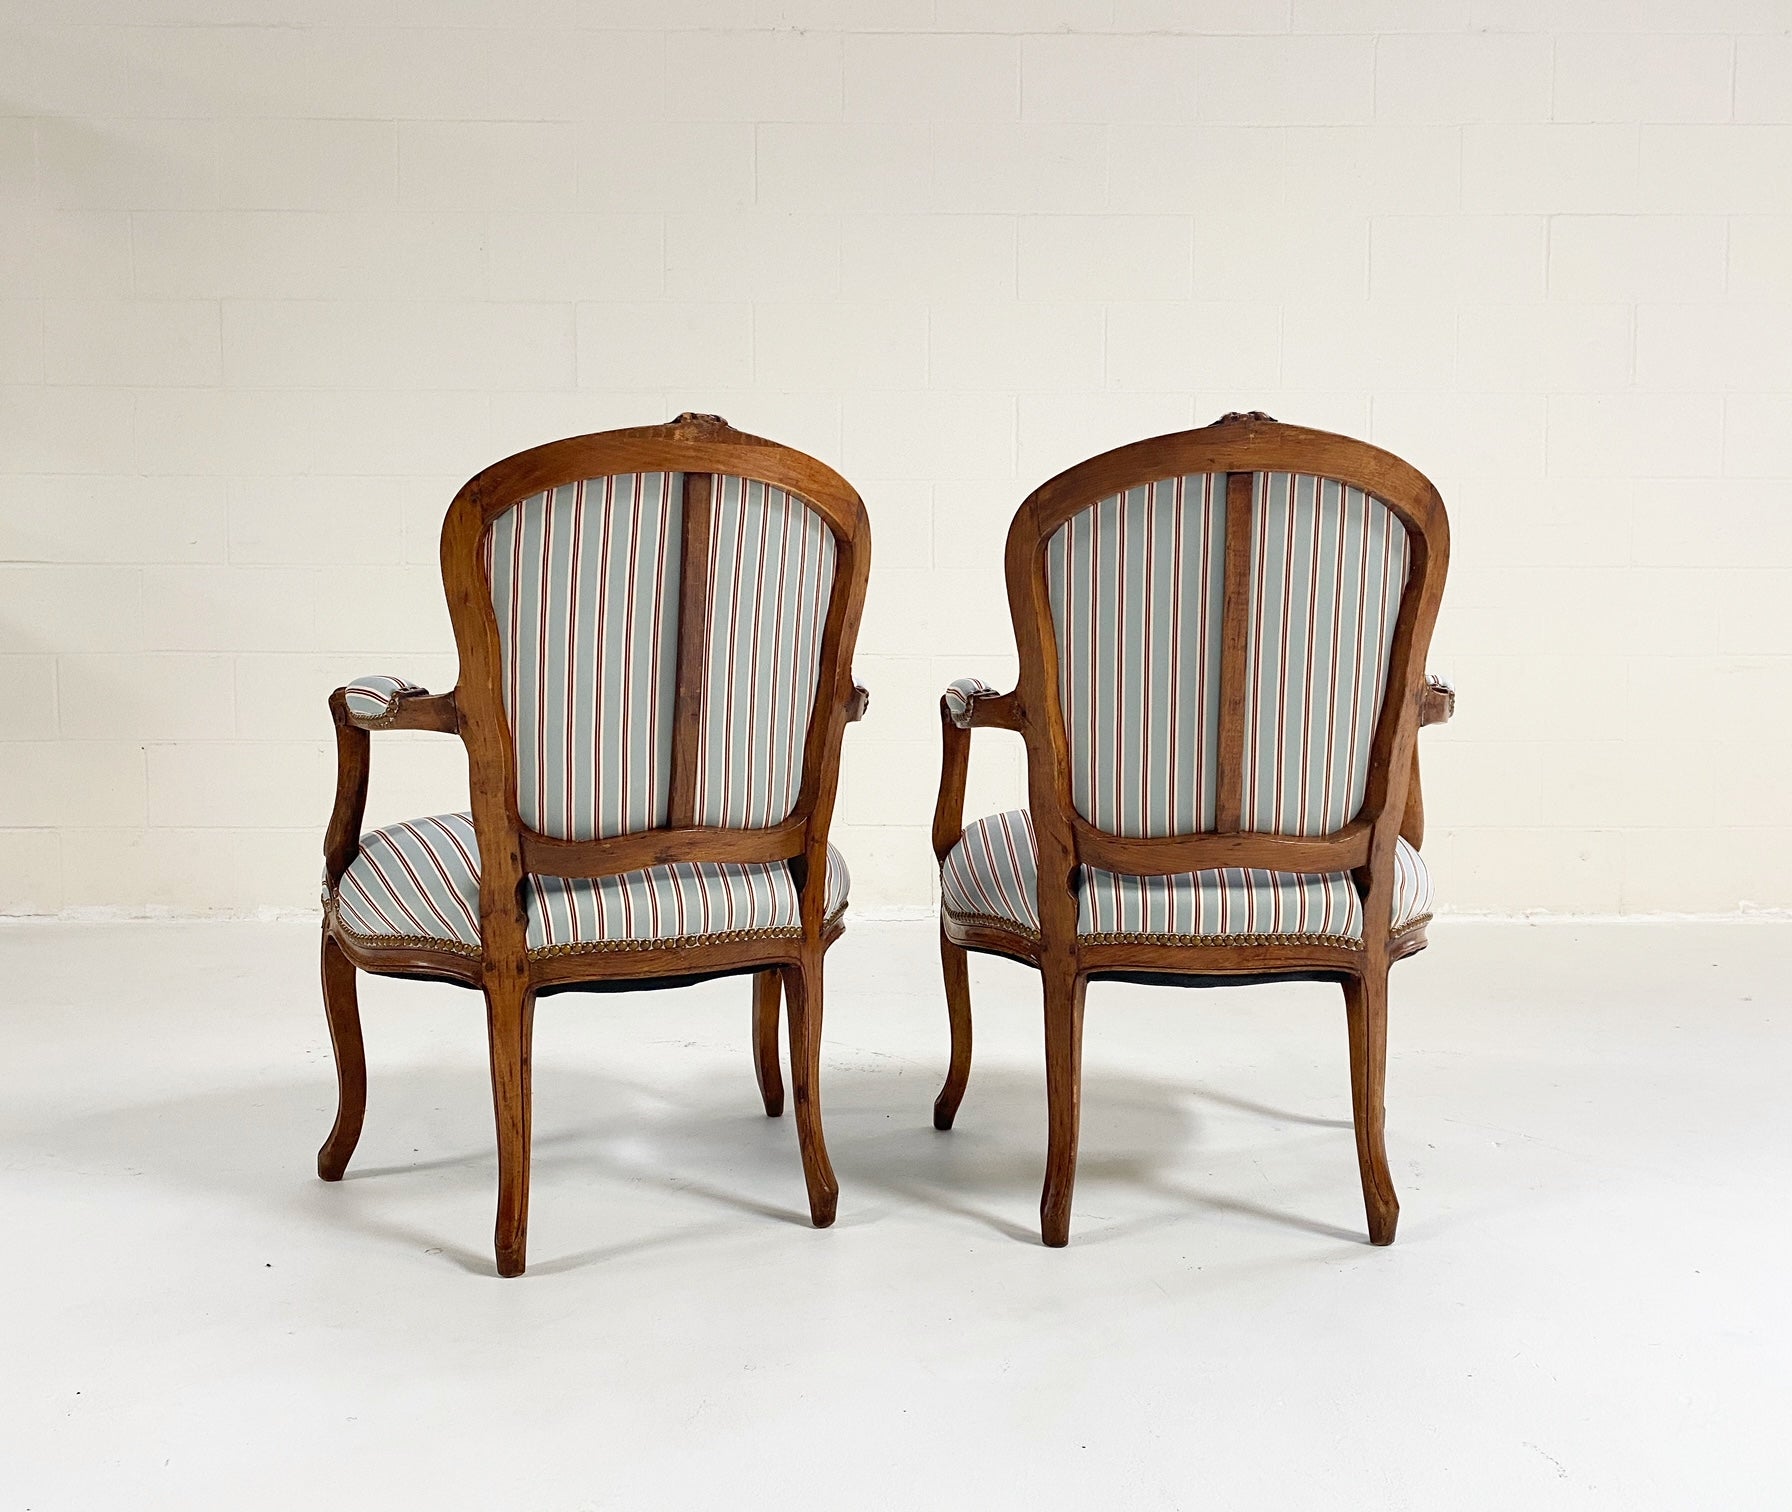 Source VINTAGE LOUIS XV Chair Antique Reproduction Furniture